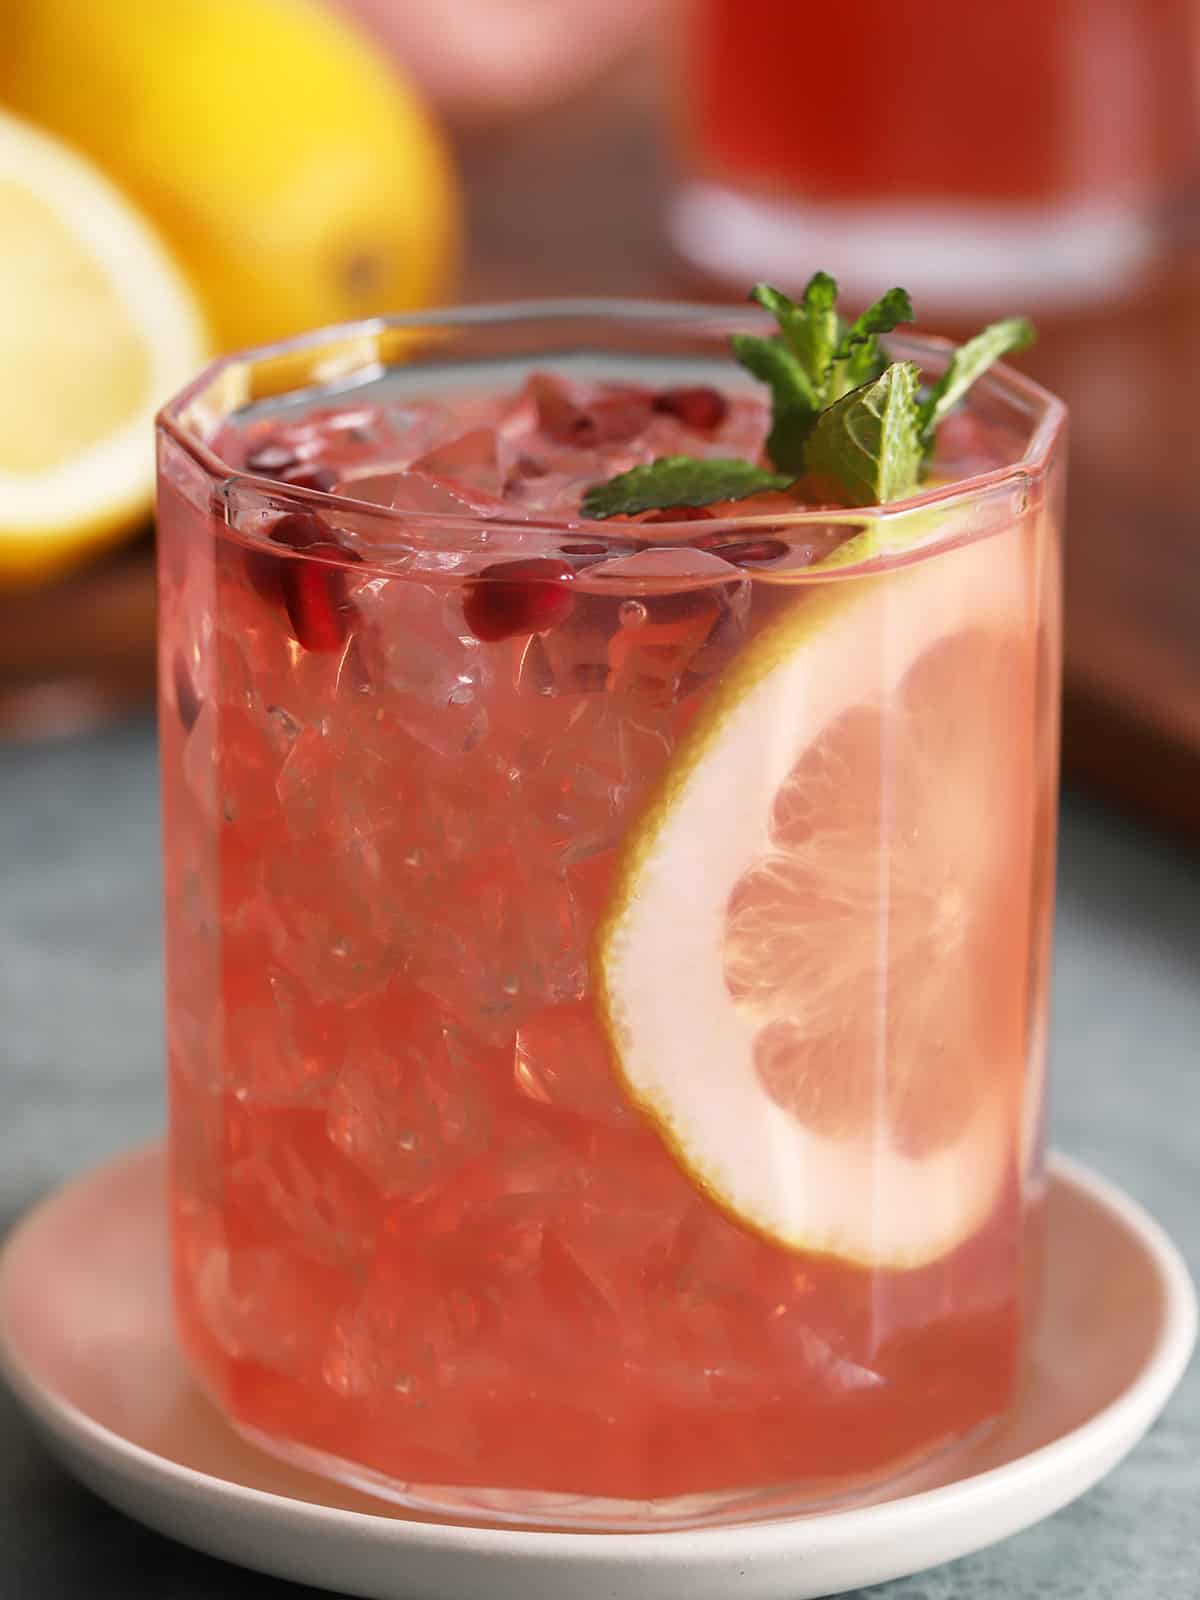 A glass of pomegranate lemonade garnished with a slice of lemon.